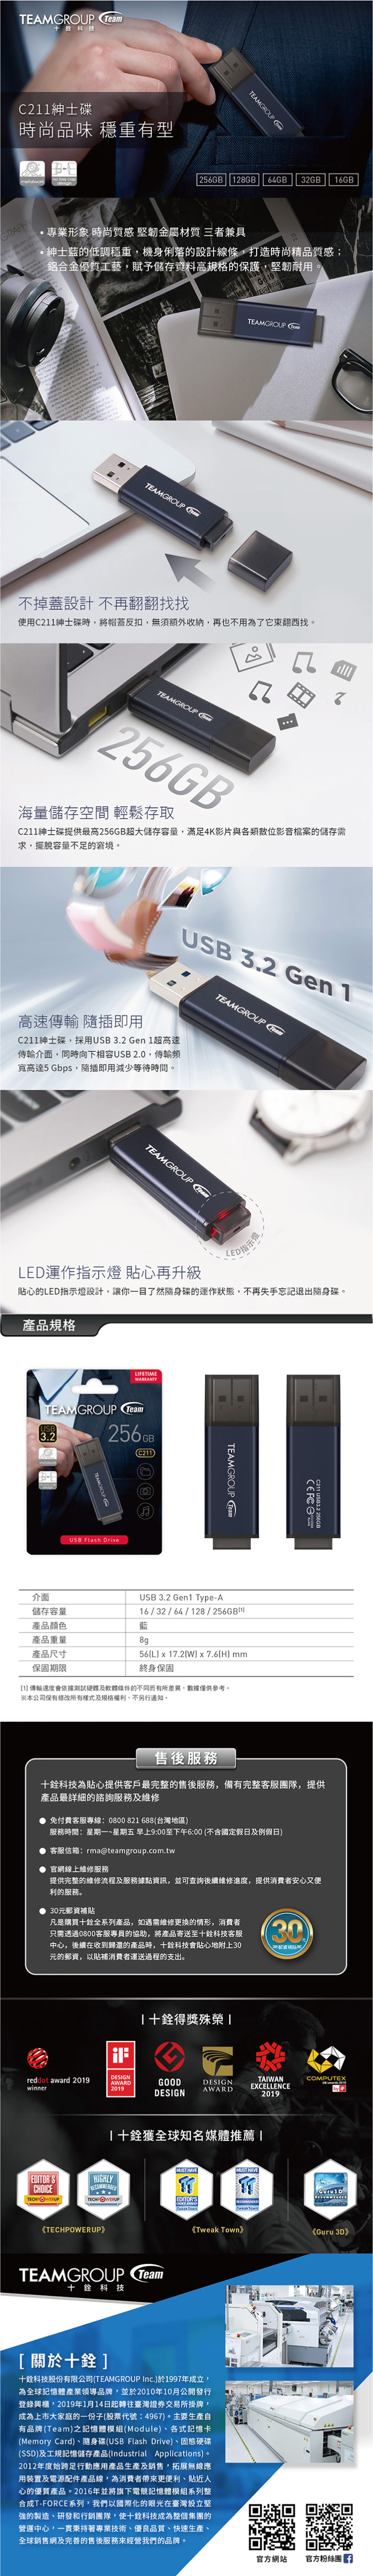 LED USB team 隨身碟 十銓科技 隨身碟